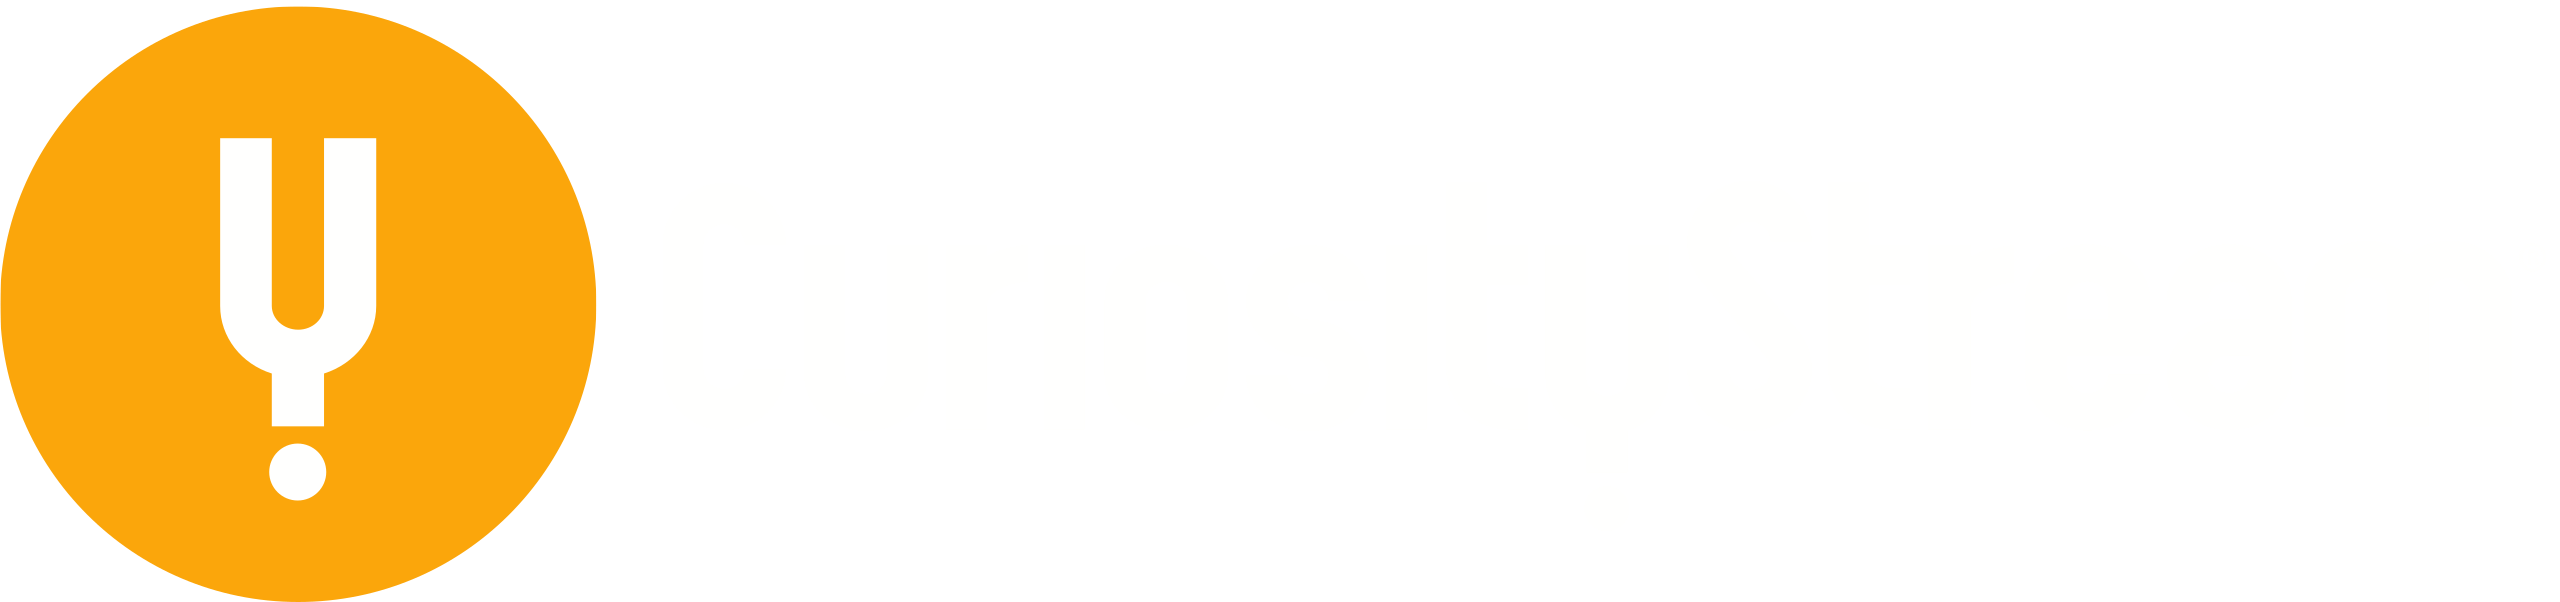 curiosity-stream logo